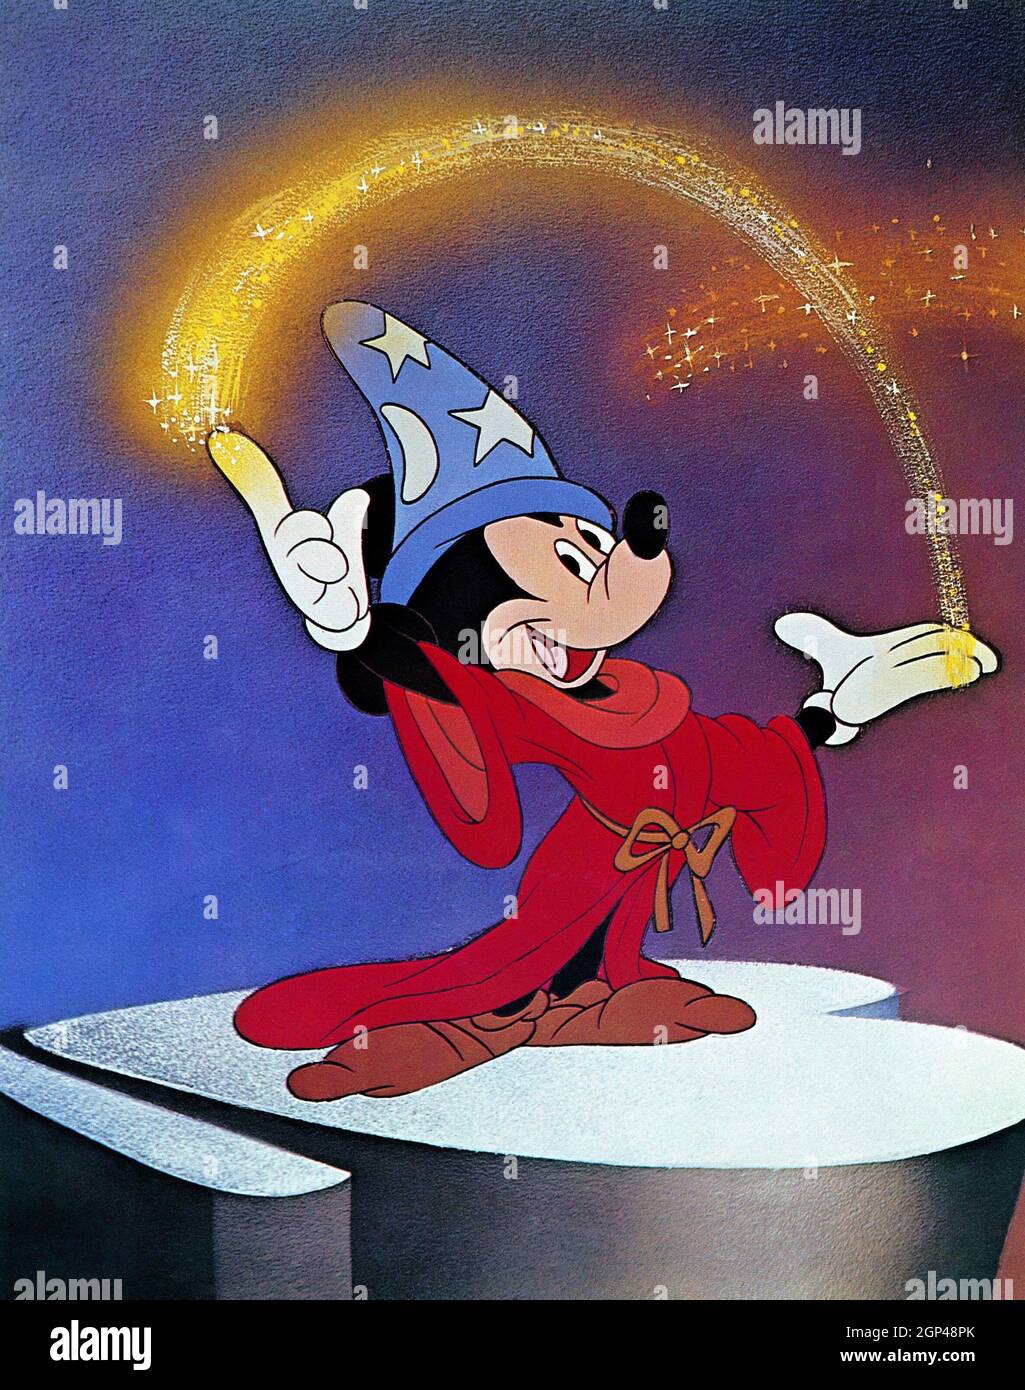 FANTASIA, Mickey ©Walt Zauberlehrling“, Collection Mouse, 1940. „der Disney/Courtesy - Stockfotografie Everett Alamy